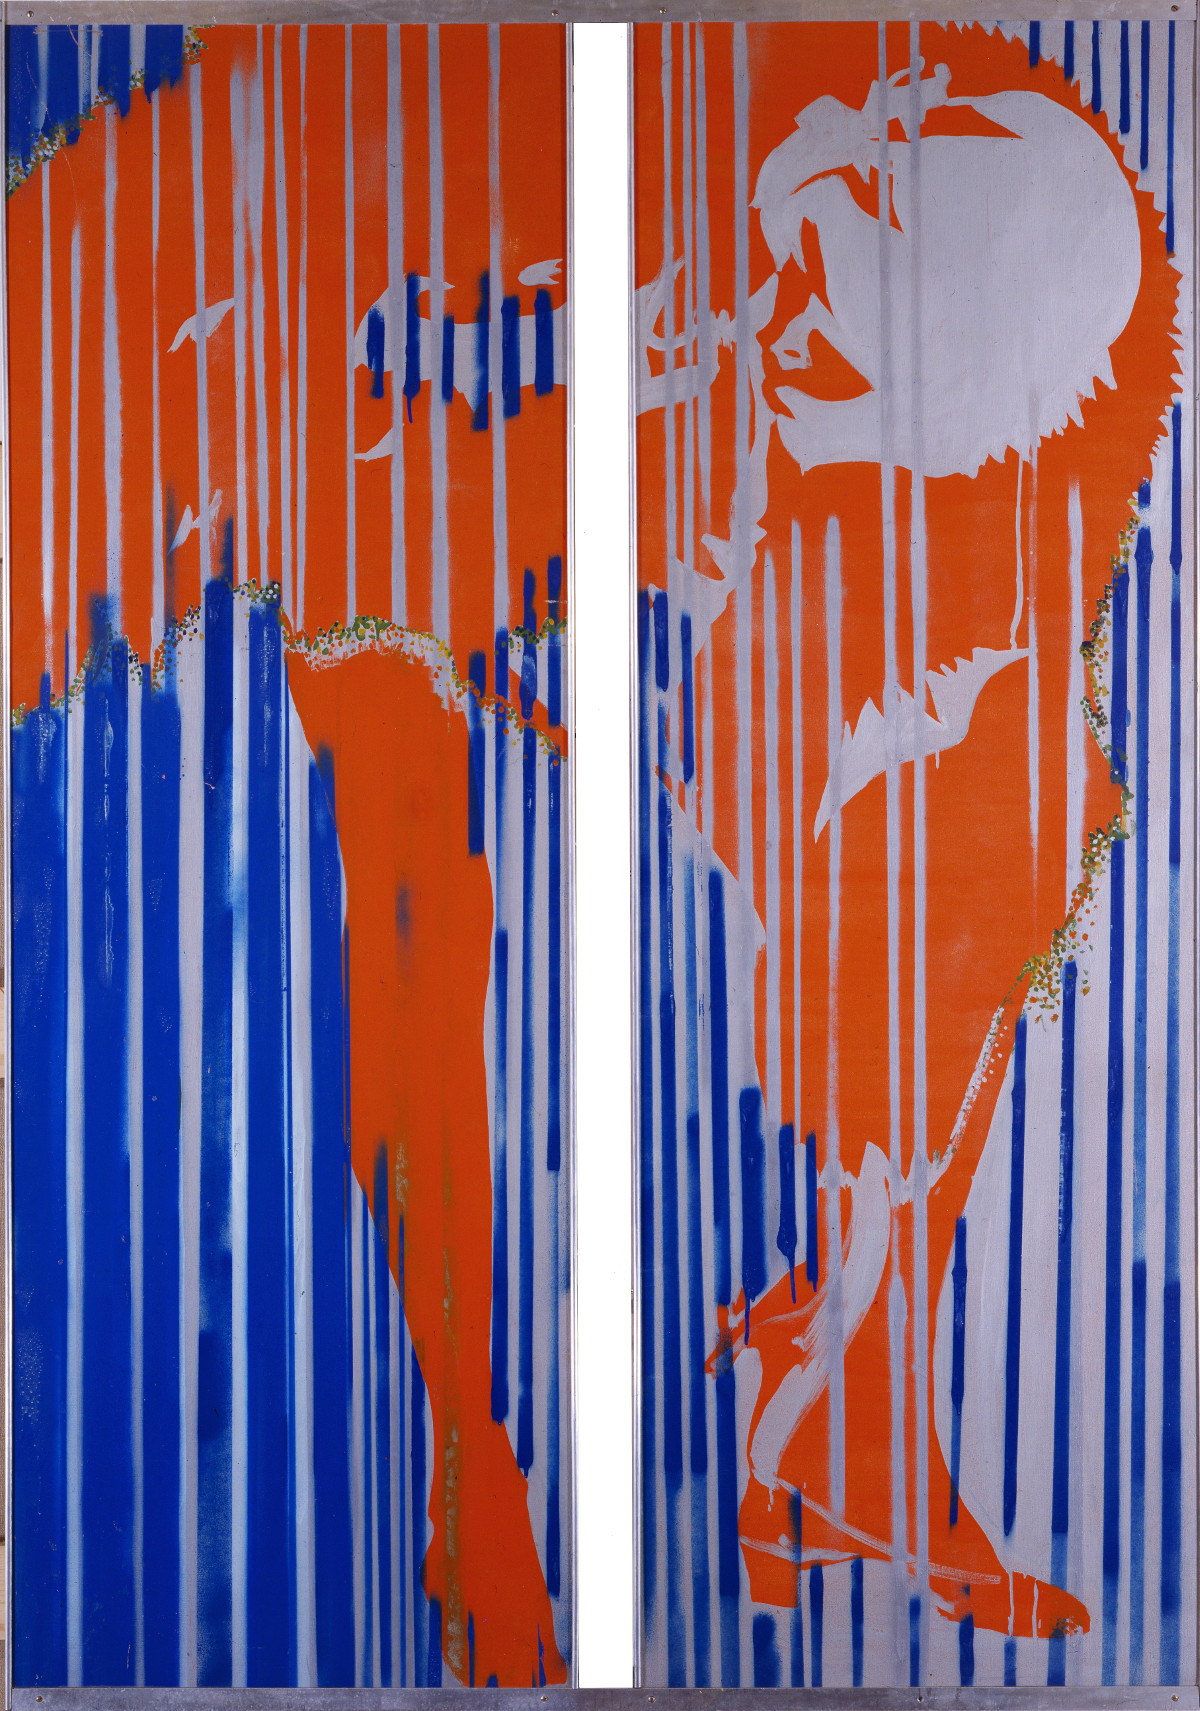 Mi si e’ sfilata la scarpa (My Shoe Slipped Off), 1968. Pencil, coloured aluminum and enamel on canvas, metal frame. Cm 180x127. Photograph by Giuseppe Schiavinotto. Courtesy of Goffredo Parise - Giosetta Fioroni Archive